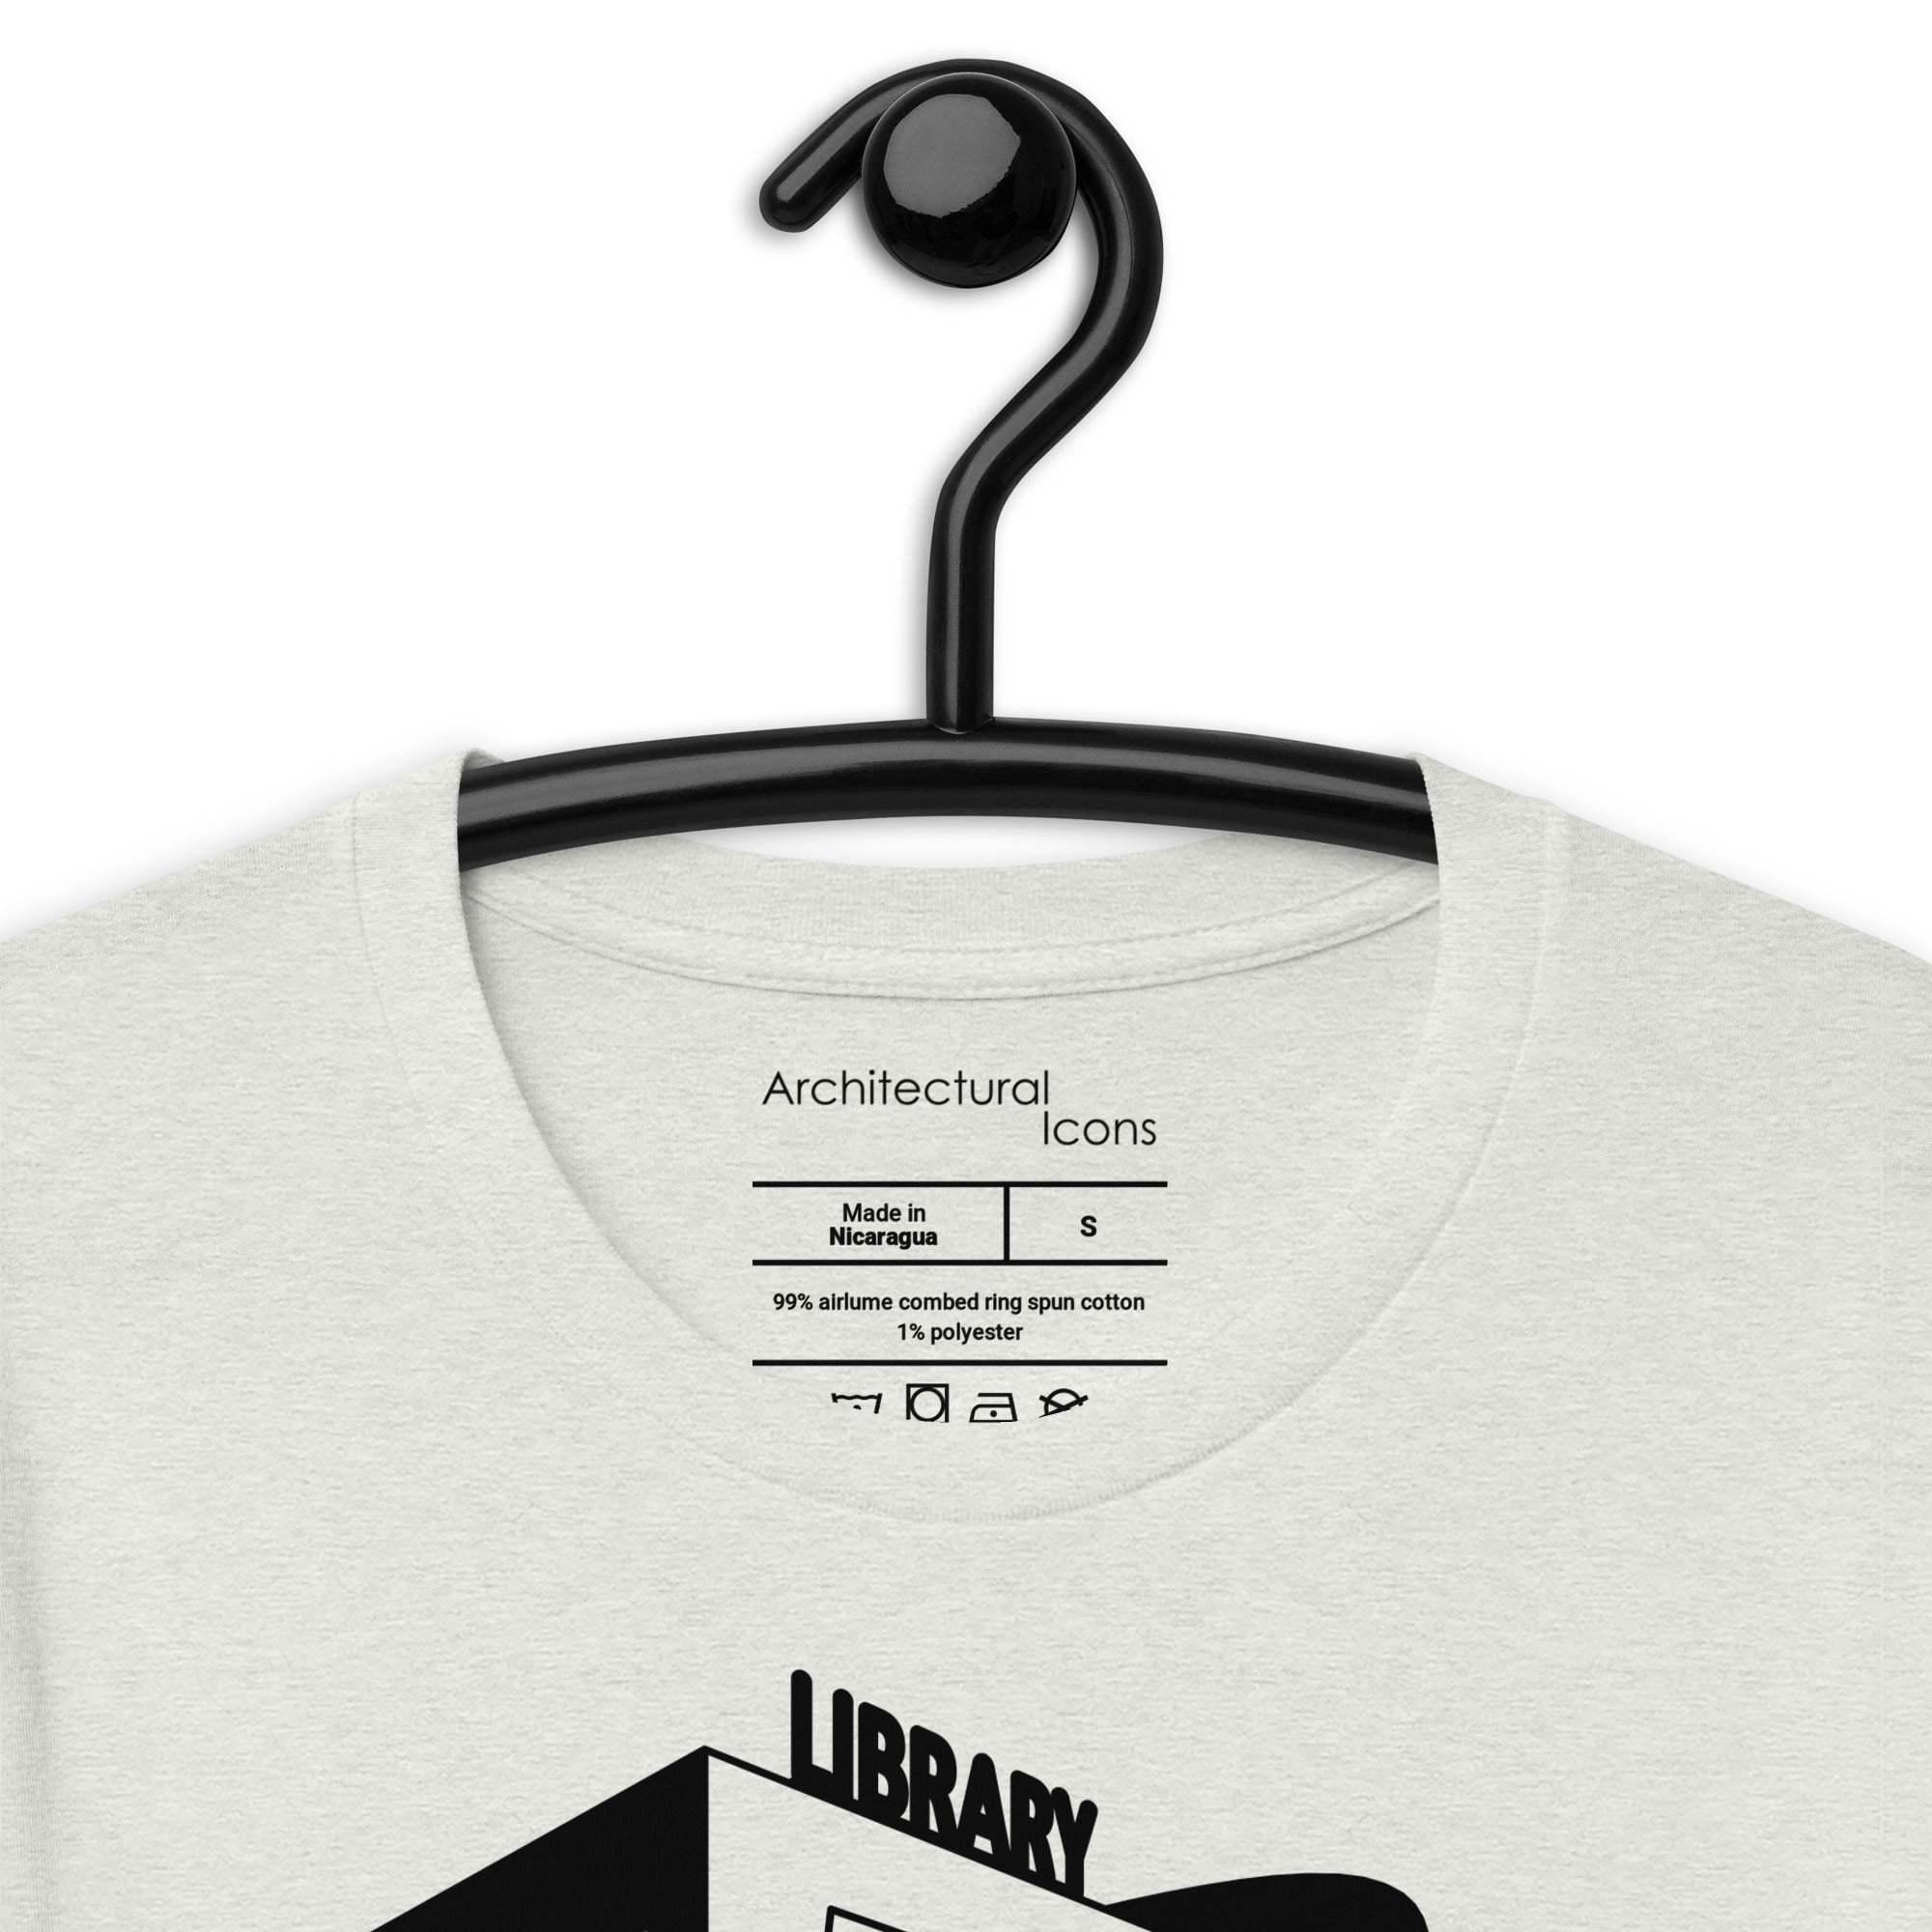 Peckham Library Unisex T-Shirt